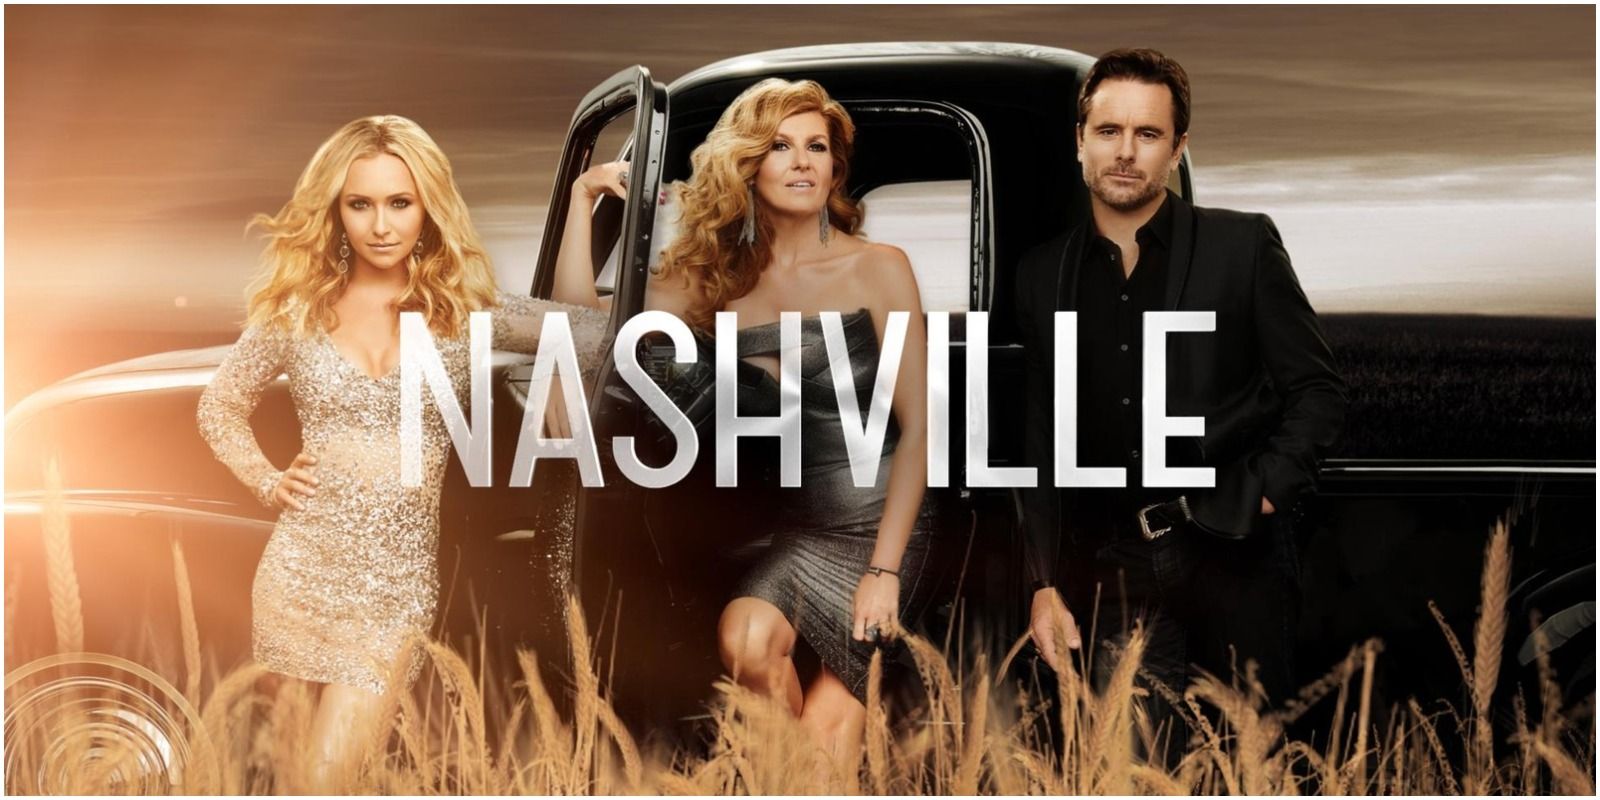 Nashville cast members posing next to a car